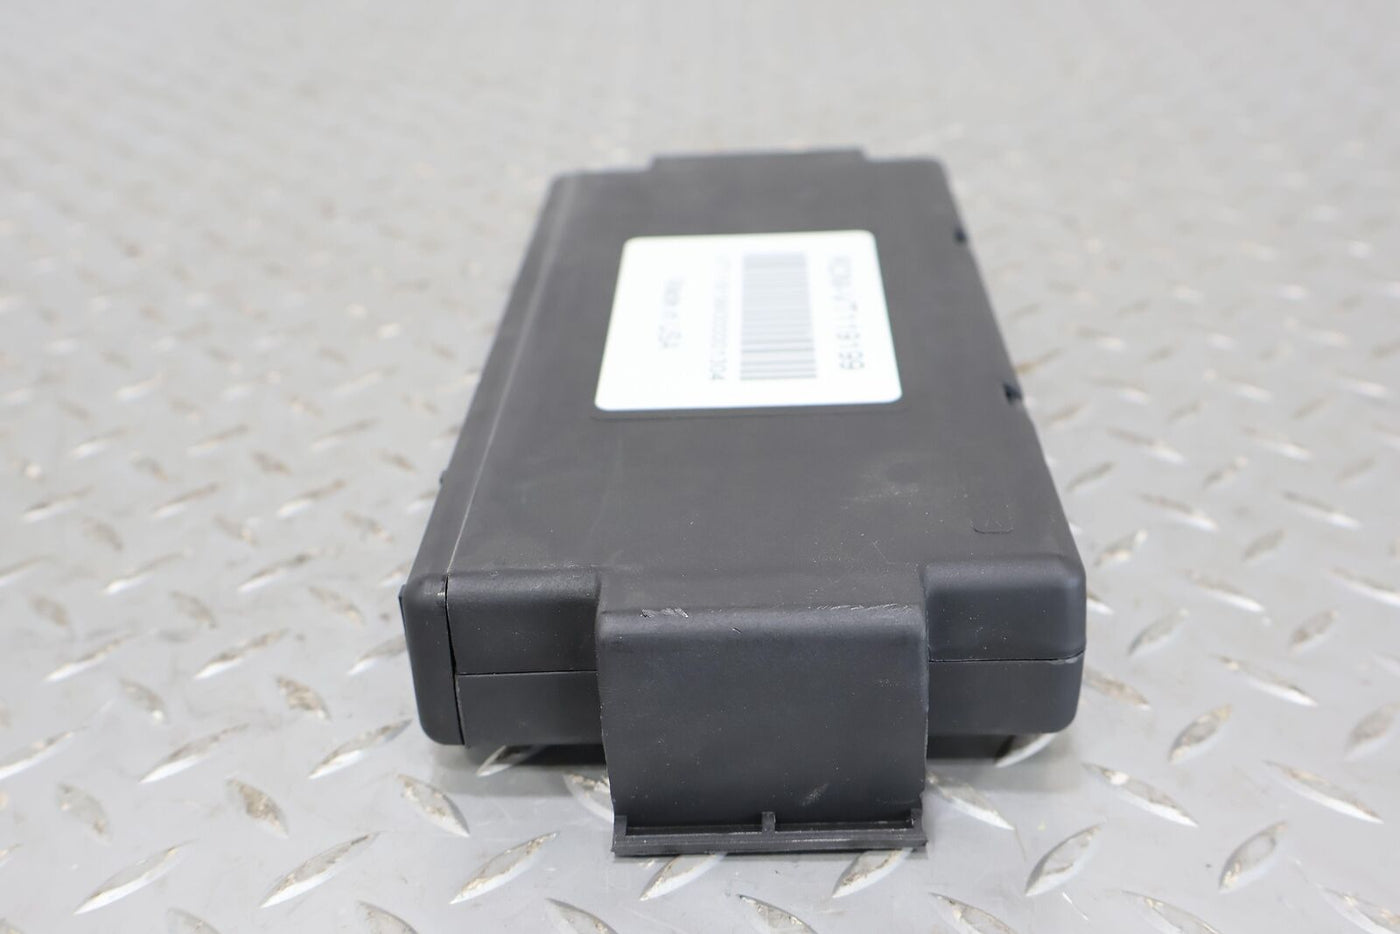 03-06 Chevy SSR Body Rear Door Roof Control Module OEM RDM (RDM-VT119199)